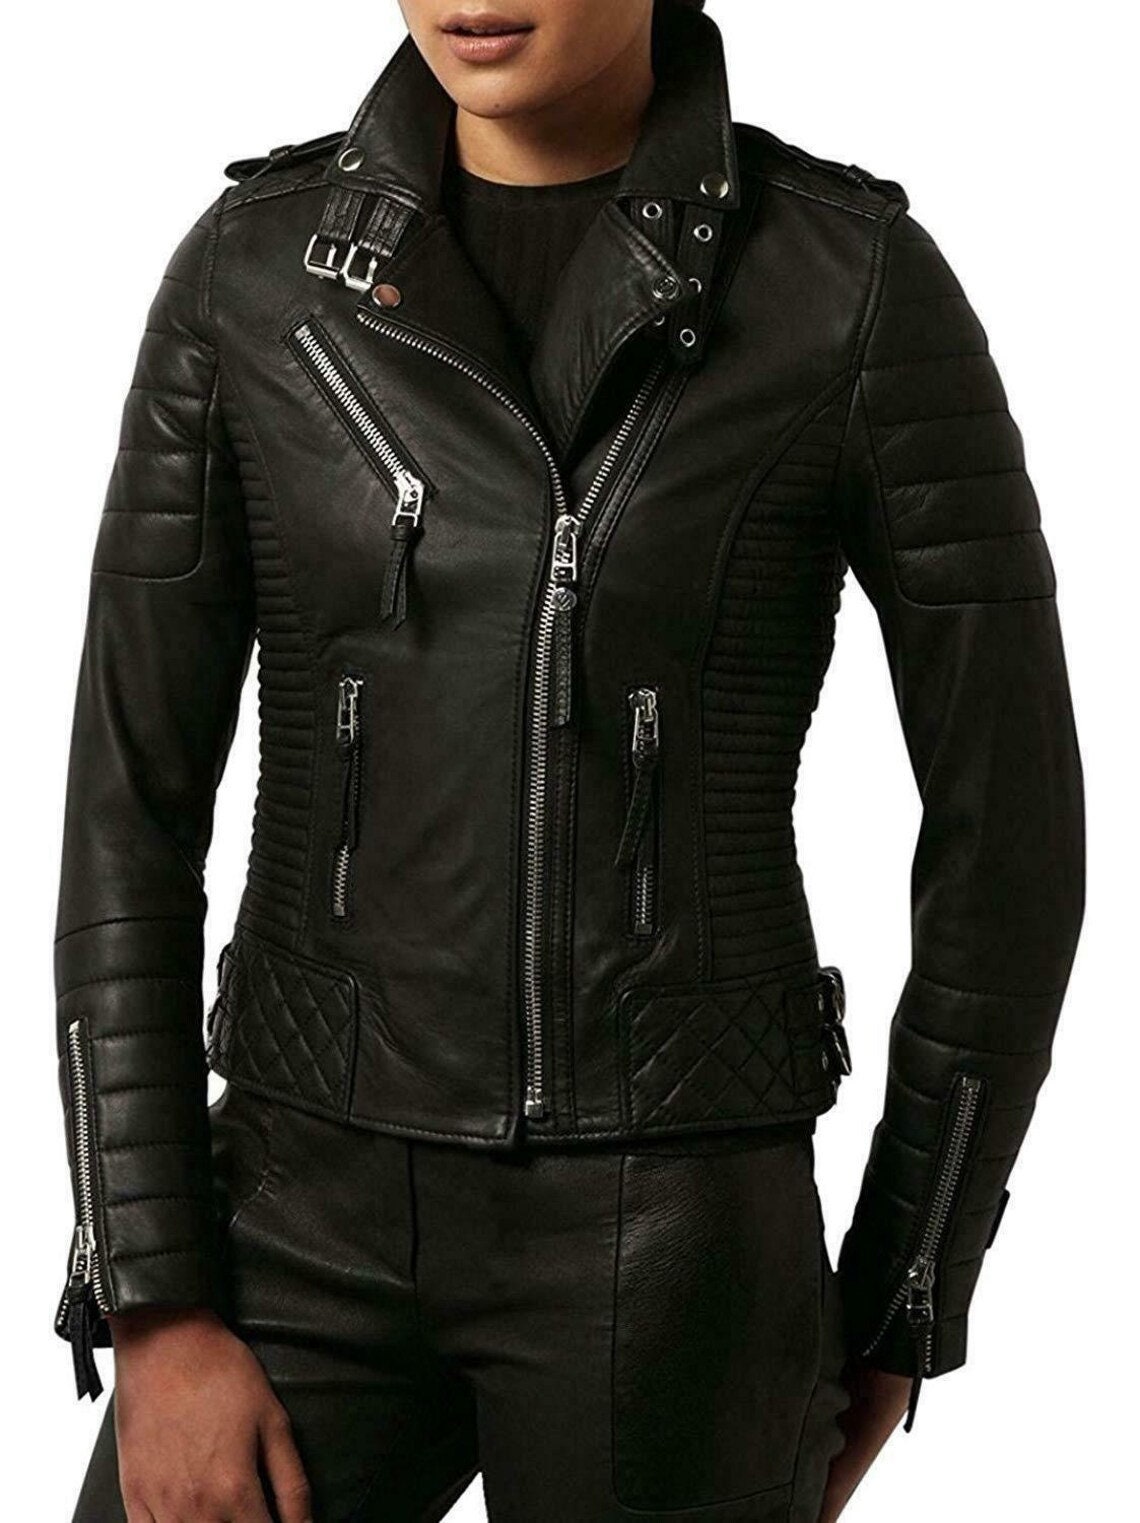 Authentic New Women's Black Leather Jacket 100% Soft - Etsy